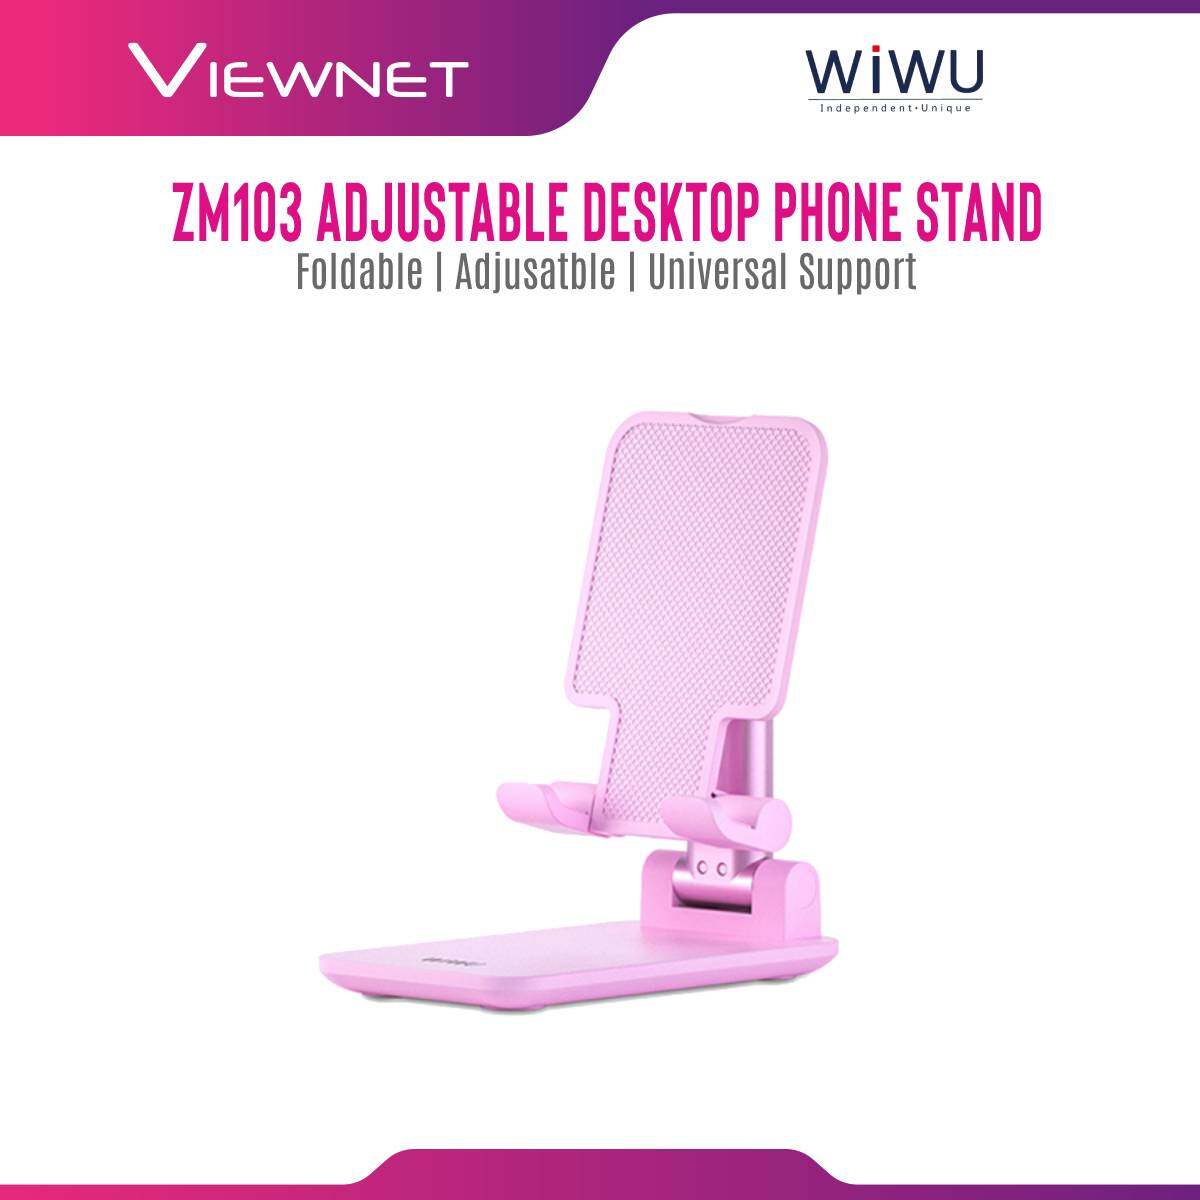 Wiwu ZM103 Adjustable Desktop Phone Stand